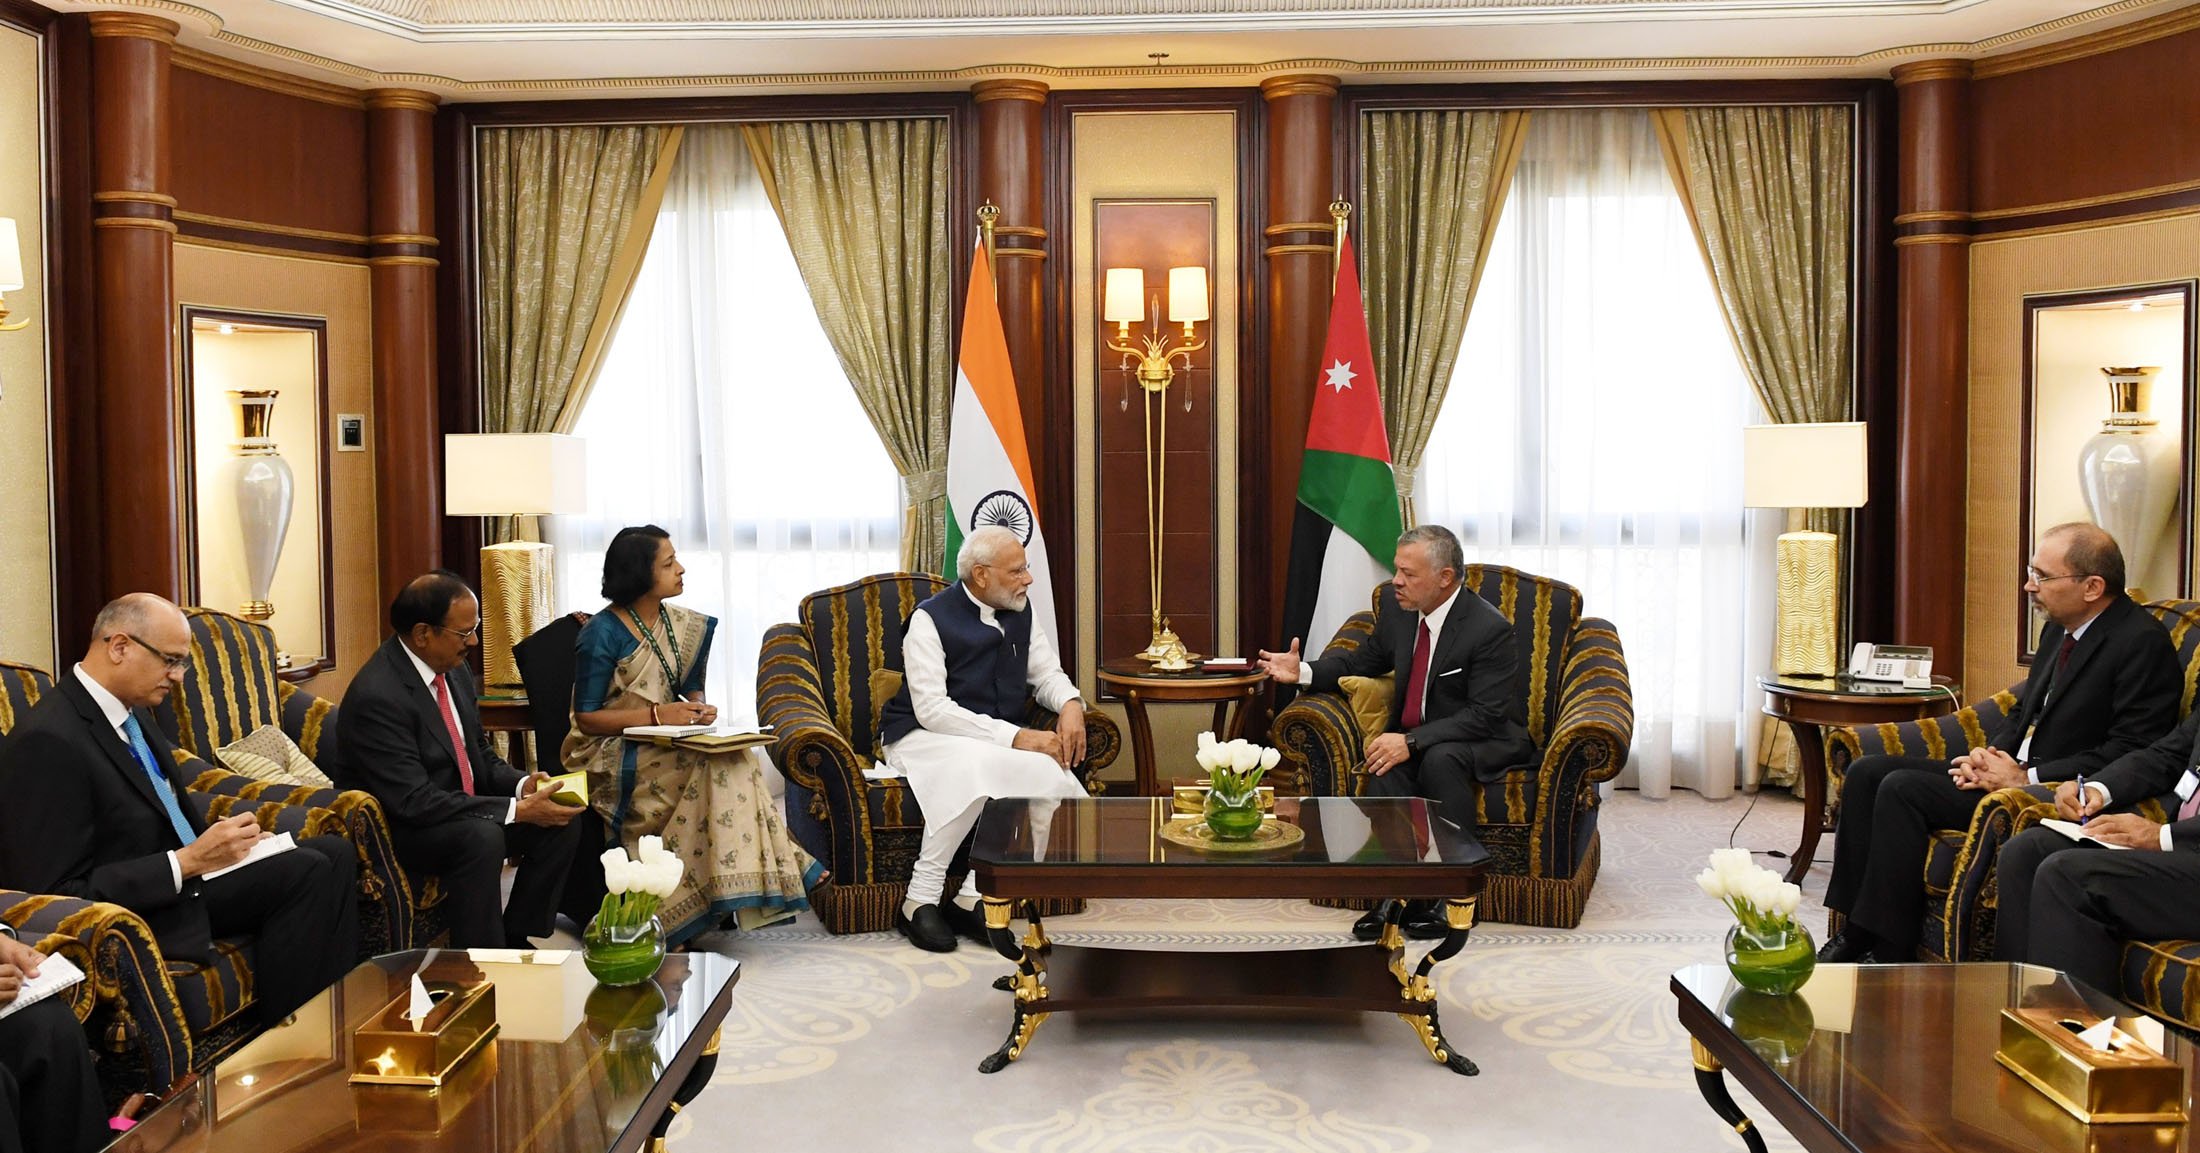 Photo of Meeting between PM and King of Jordan in Riyadh